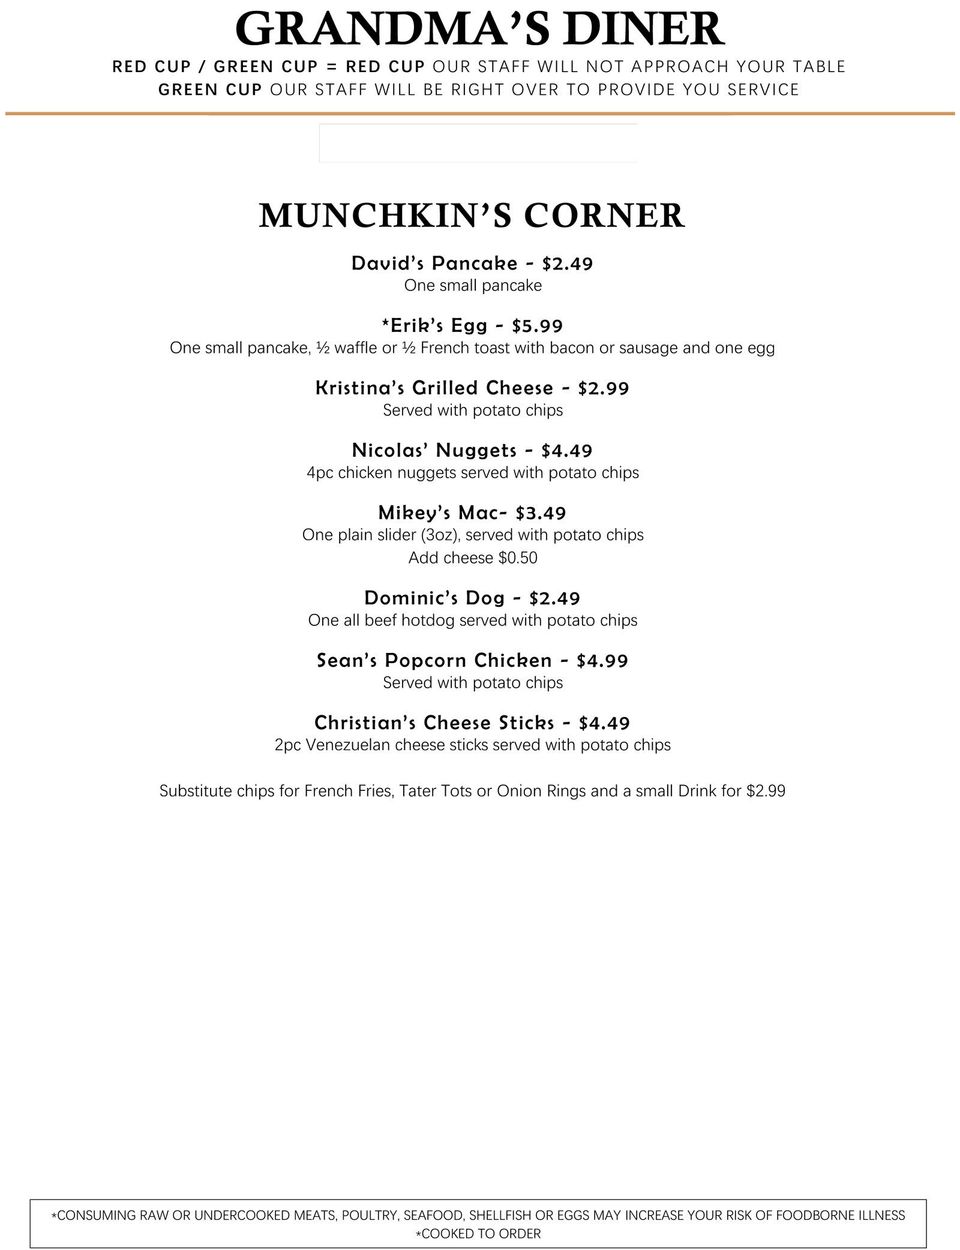 3gma menu munchkins